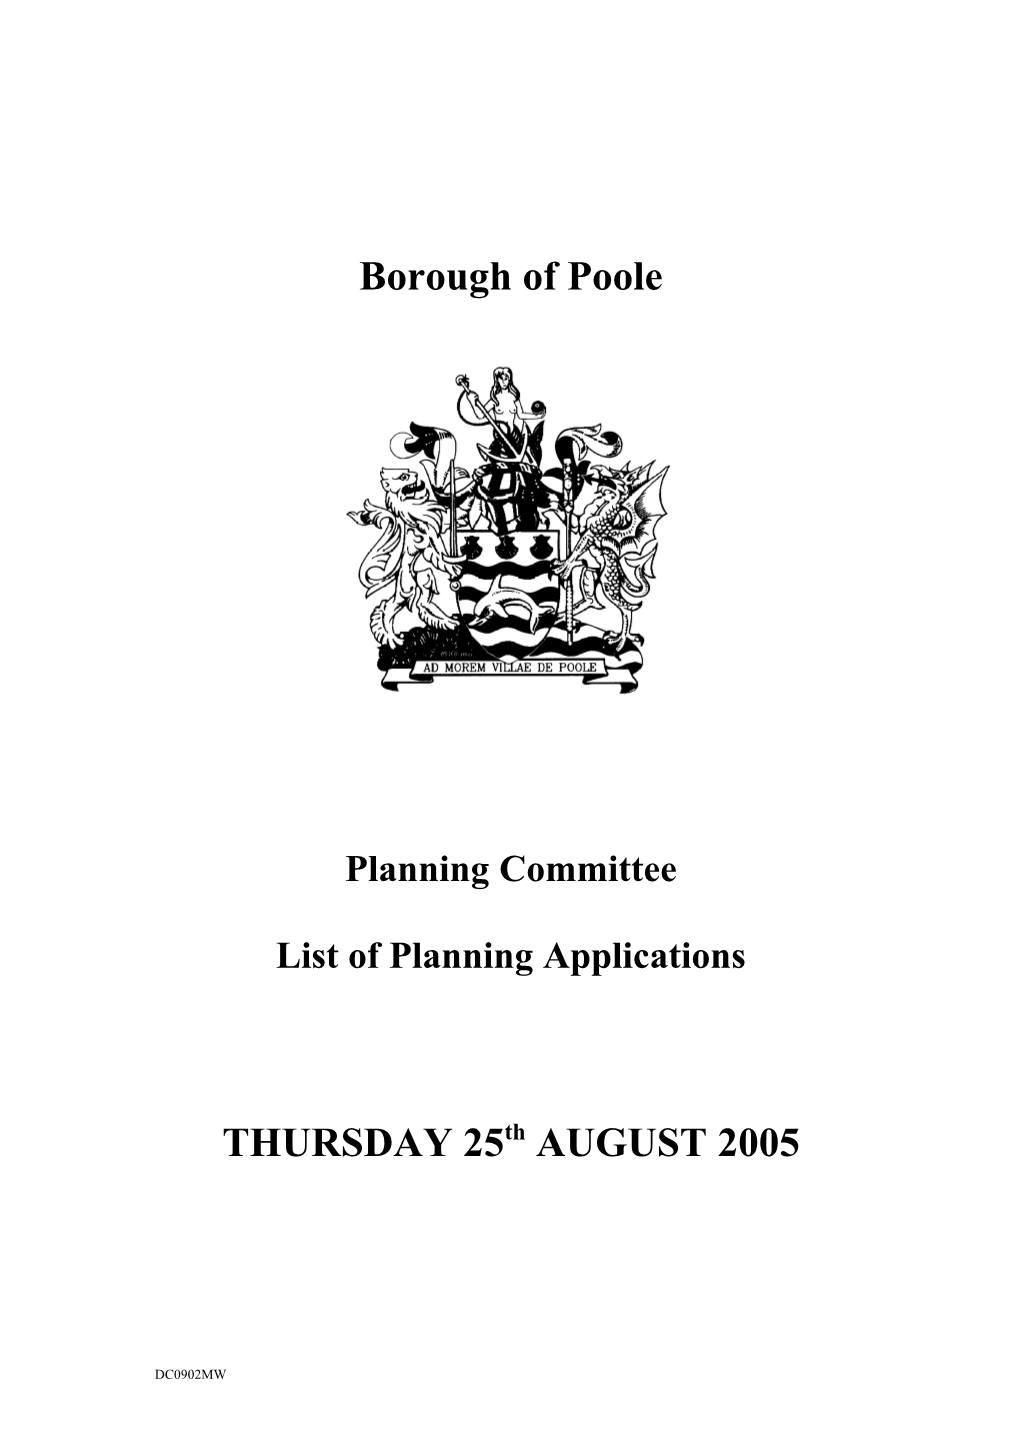 Final Plans List - 25 August 2005